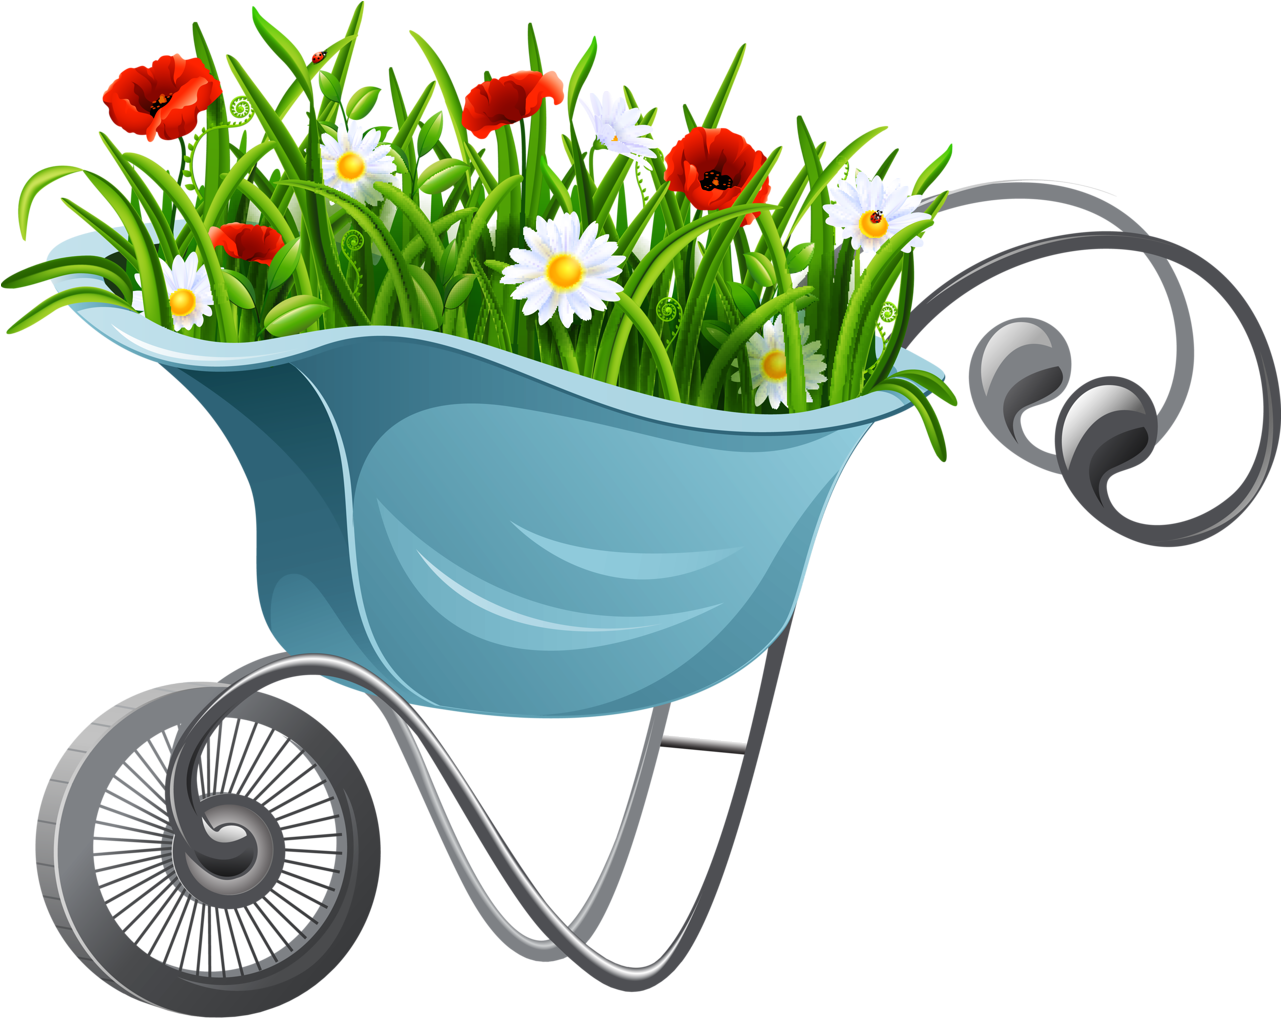 Garden - Flowers In Cart Clipart (1280x1054)